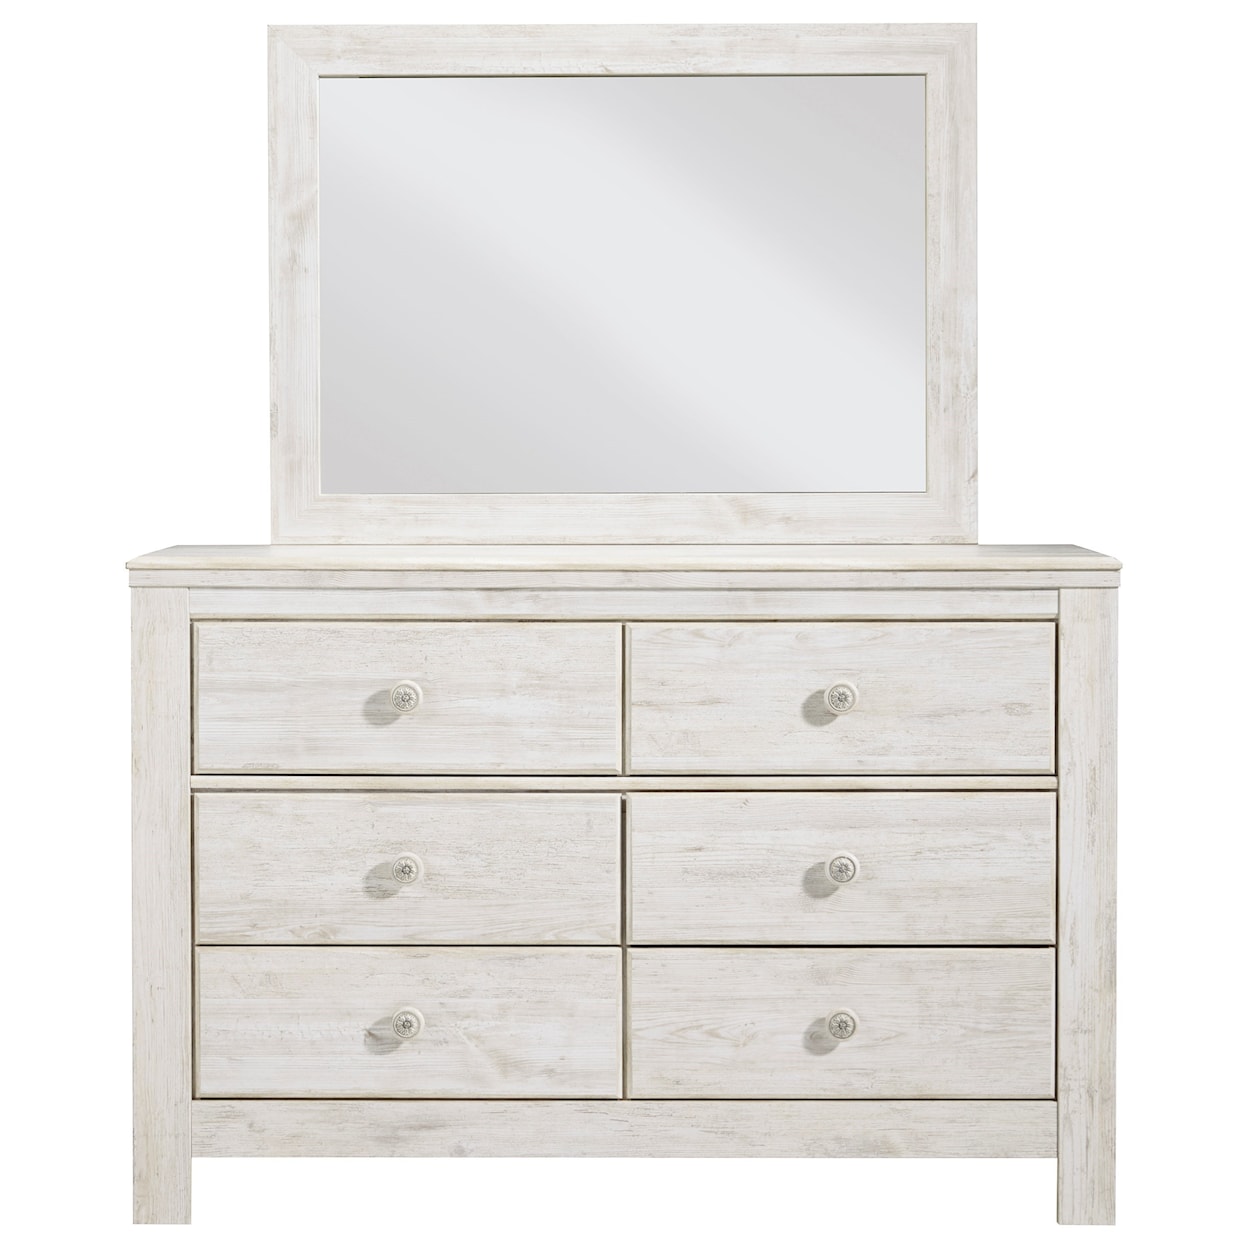 Ashley Furniture Signature Design Paxberry Dresser & Bedroom Mirror